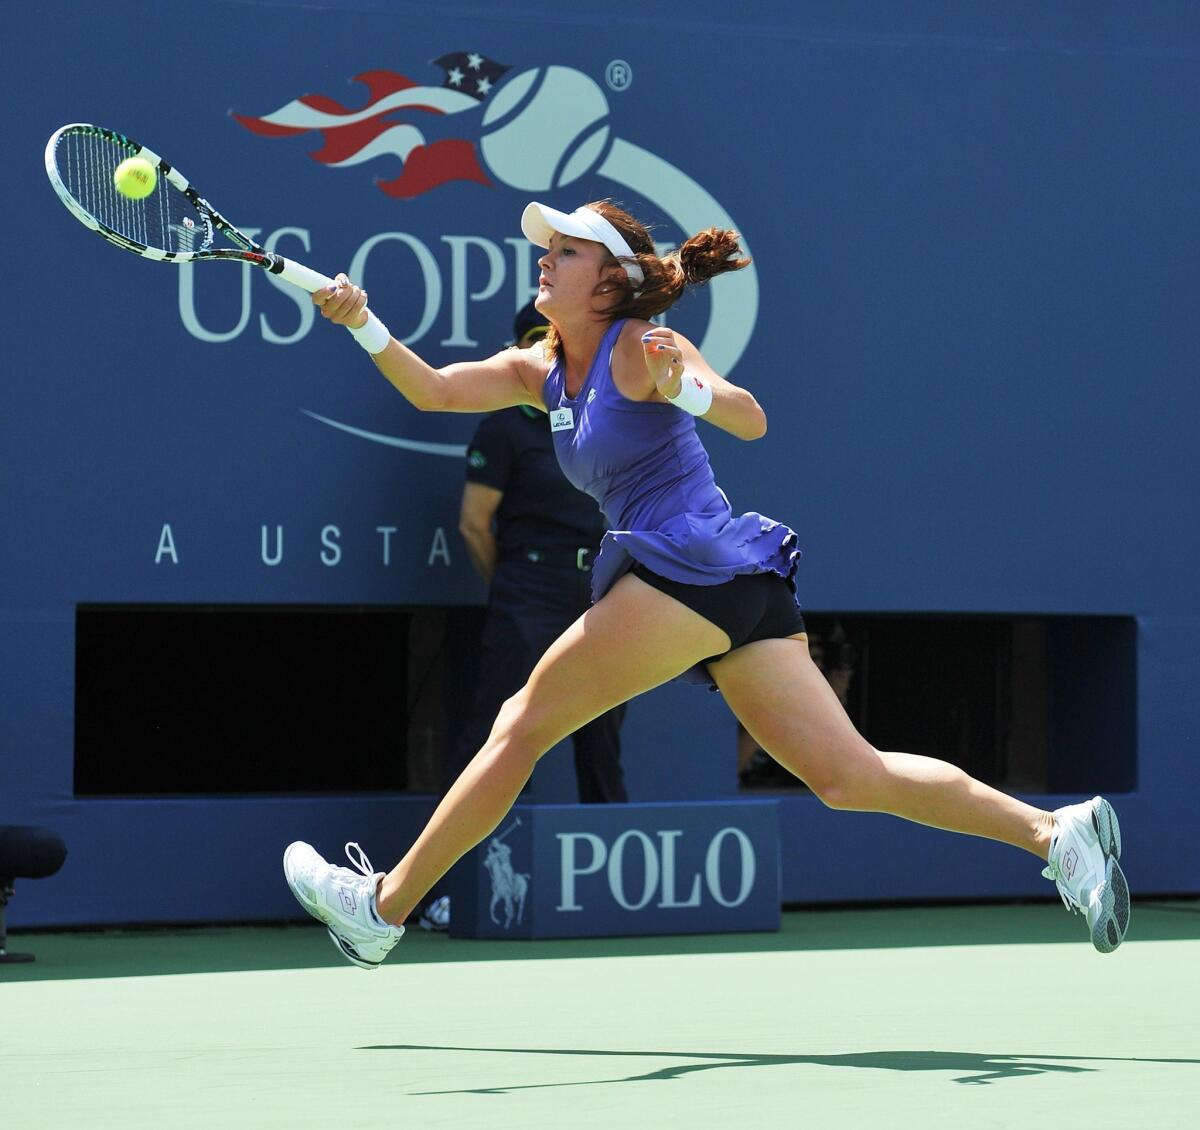 Agnieszka Radwanska hits a return to Nina Bratchikova during their match on the second day of the U.S. Open.